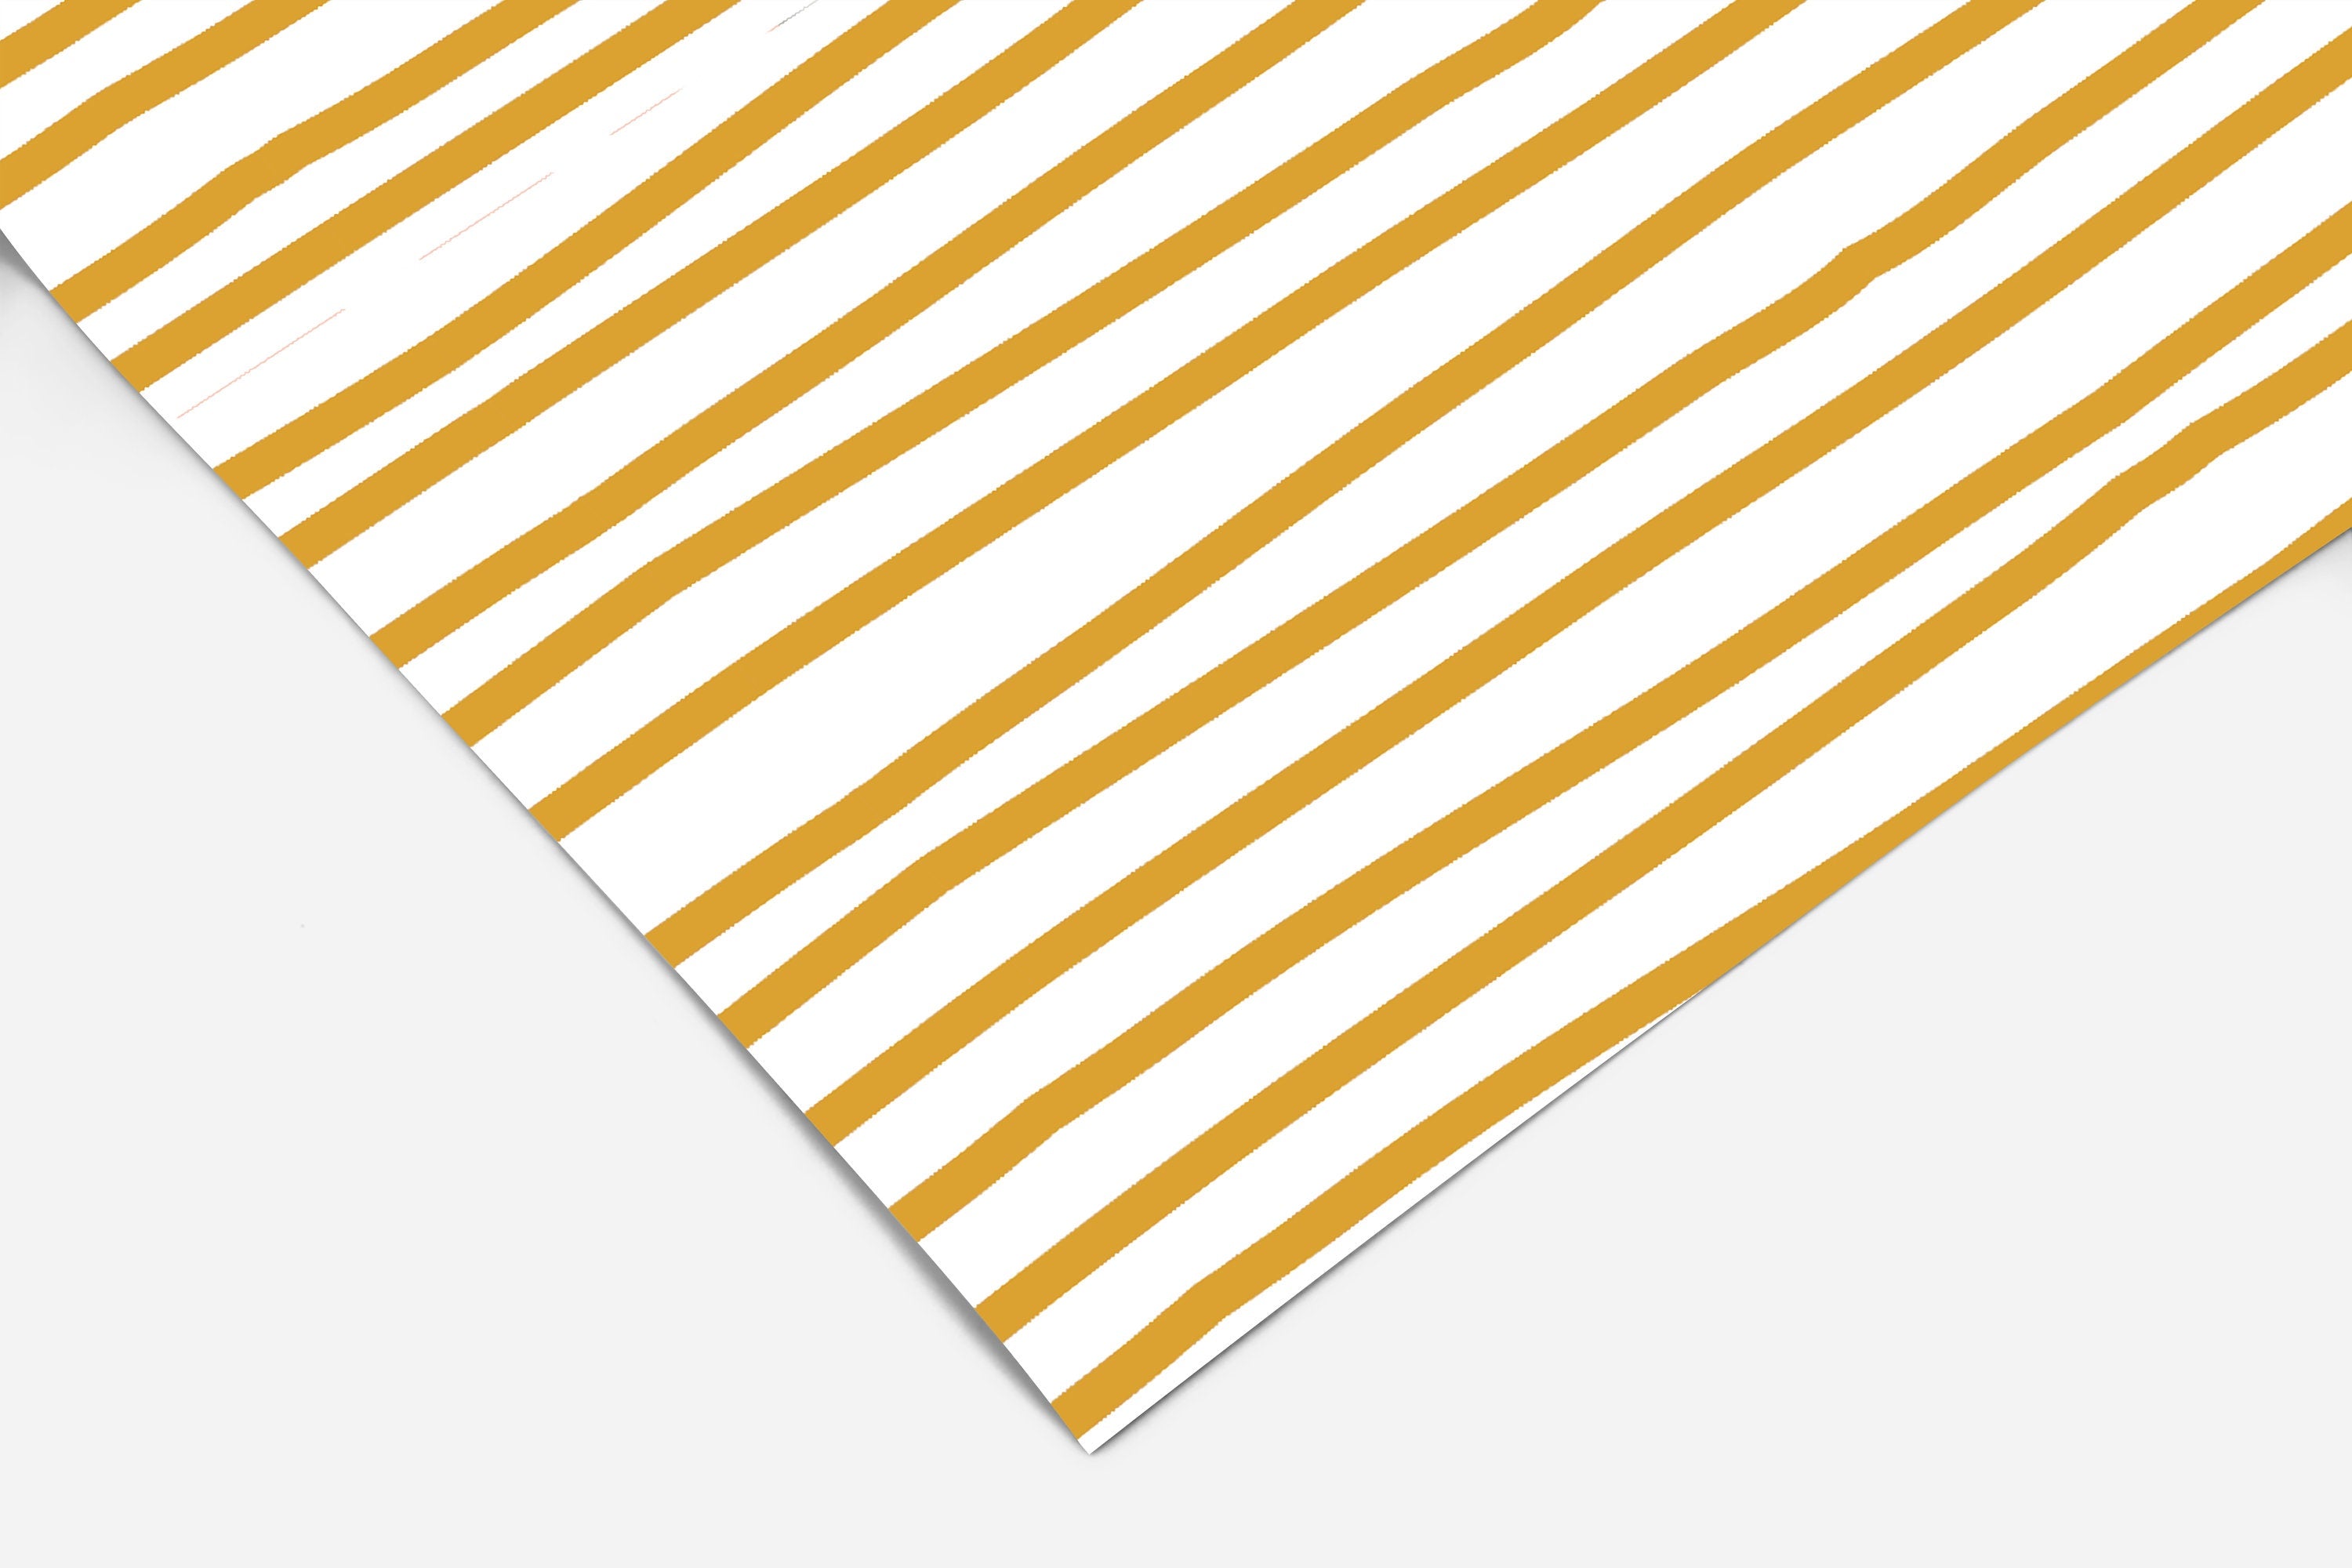 Gold Drawn Line Wallpaper | Removable Wallpaper | Peel And Stick Wallpaper | Adhesive Wallpaper | Wall Paper Peel And Stick Wall Mural 2311 - JamesAndColors